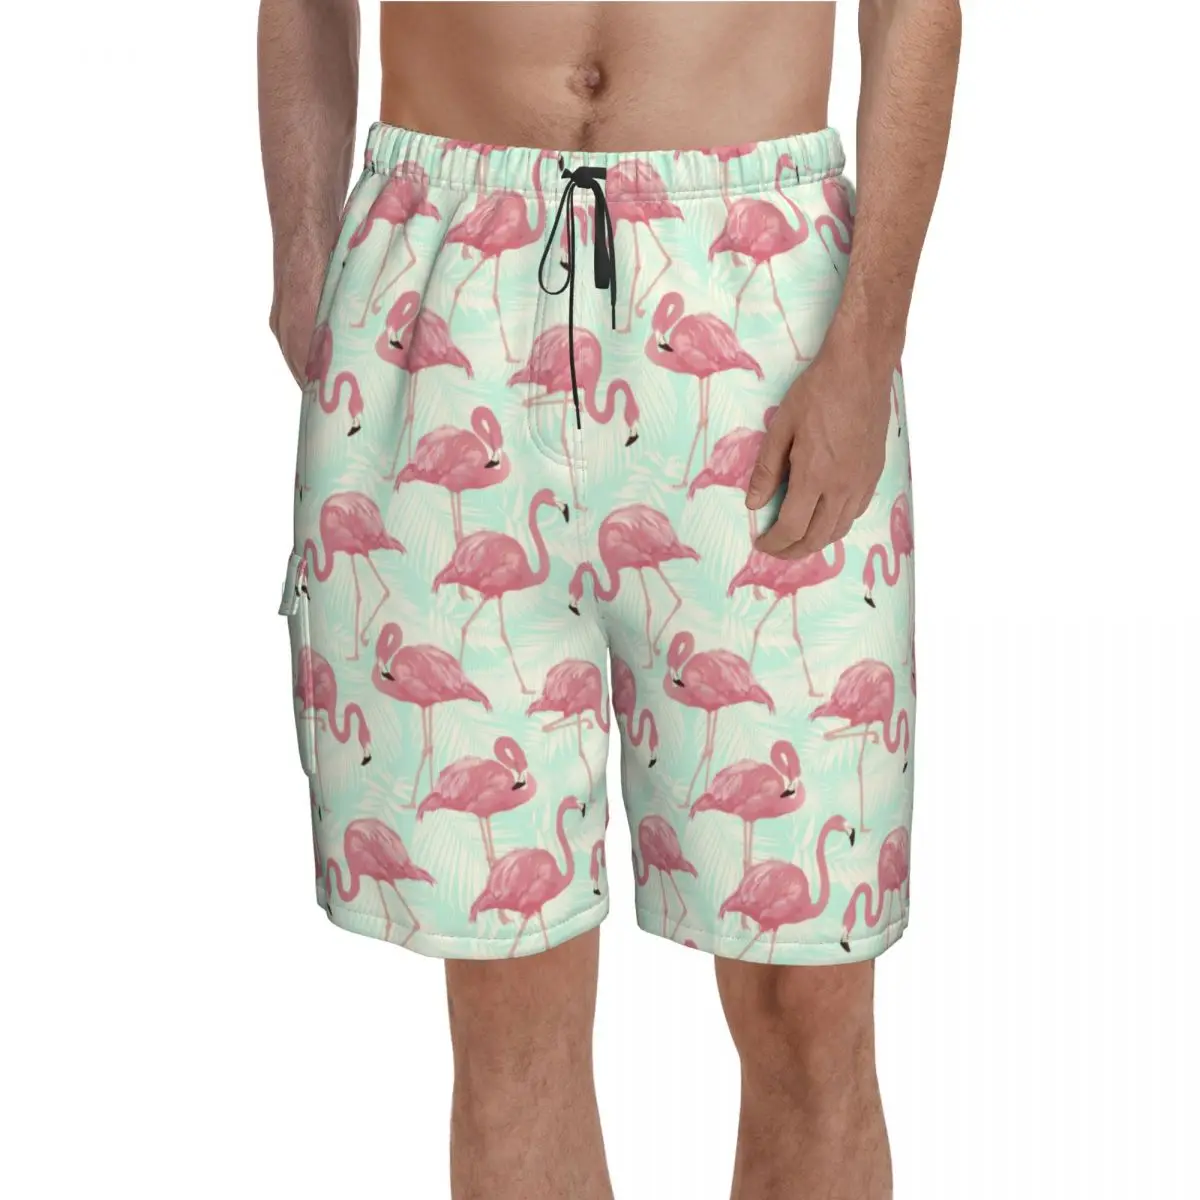 

Cute Flamingo Pattern Board Shorts Tropical Animal Print Funny Beach Shorts Males Printed Large Size Swim Trunks Gift Idea